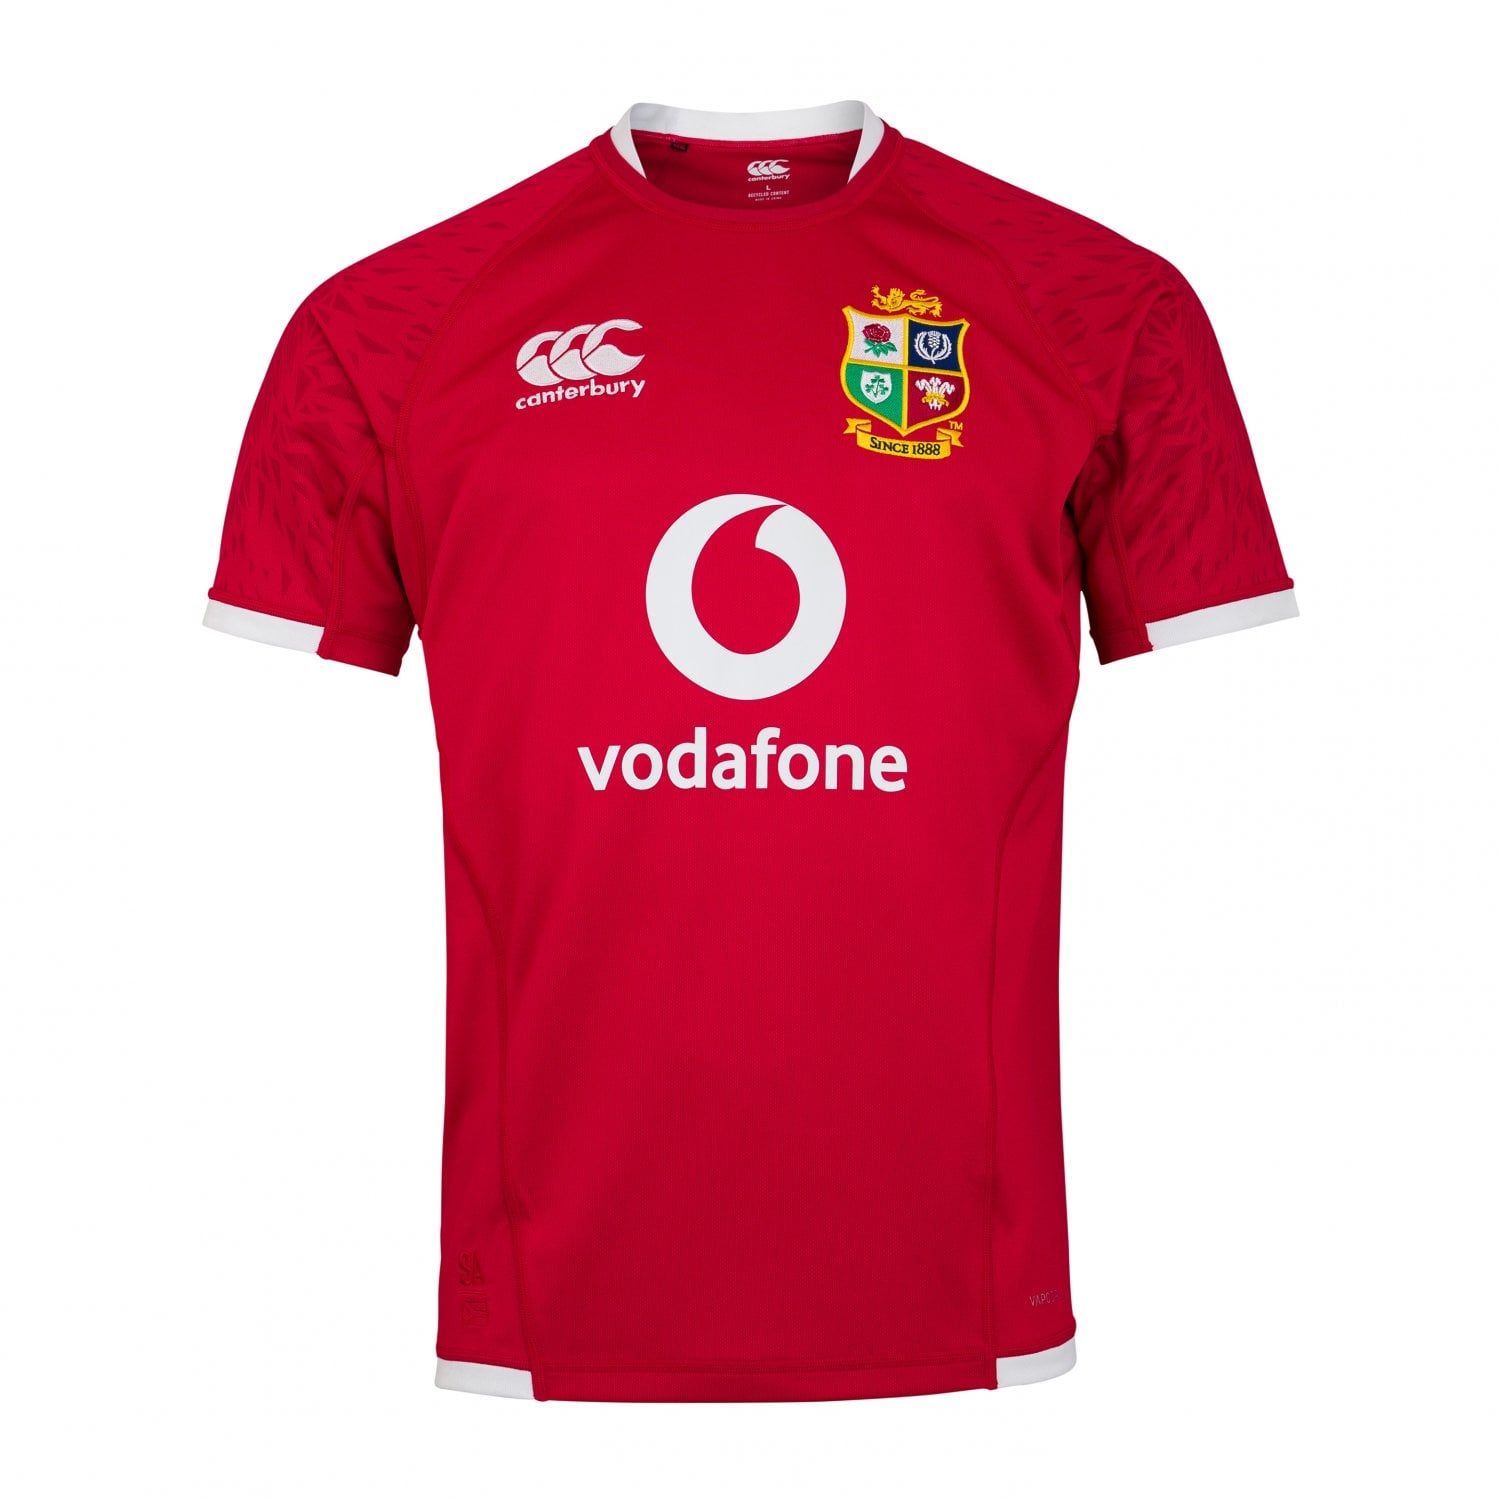 Camiseta British & Irish Lions Canterbury